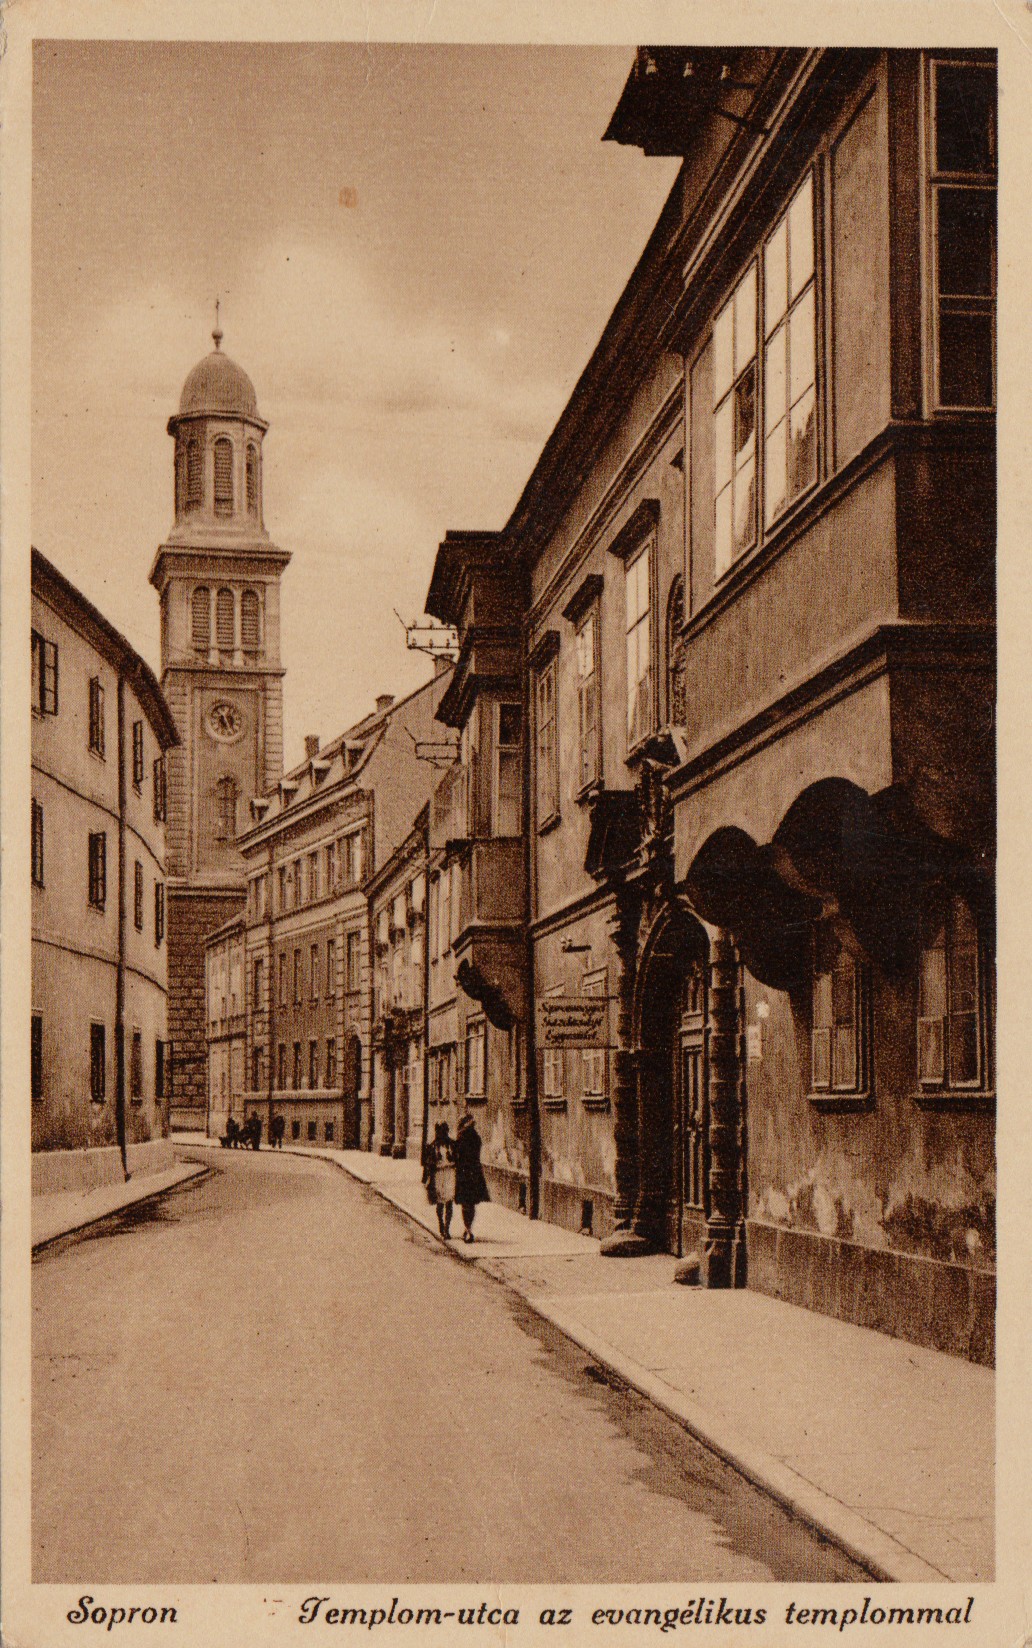 Soproni képeslap (Tapolcai Városi Múzeum CC BY-NC-SA)